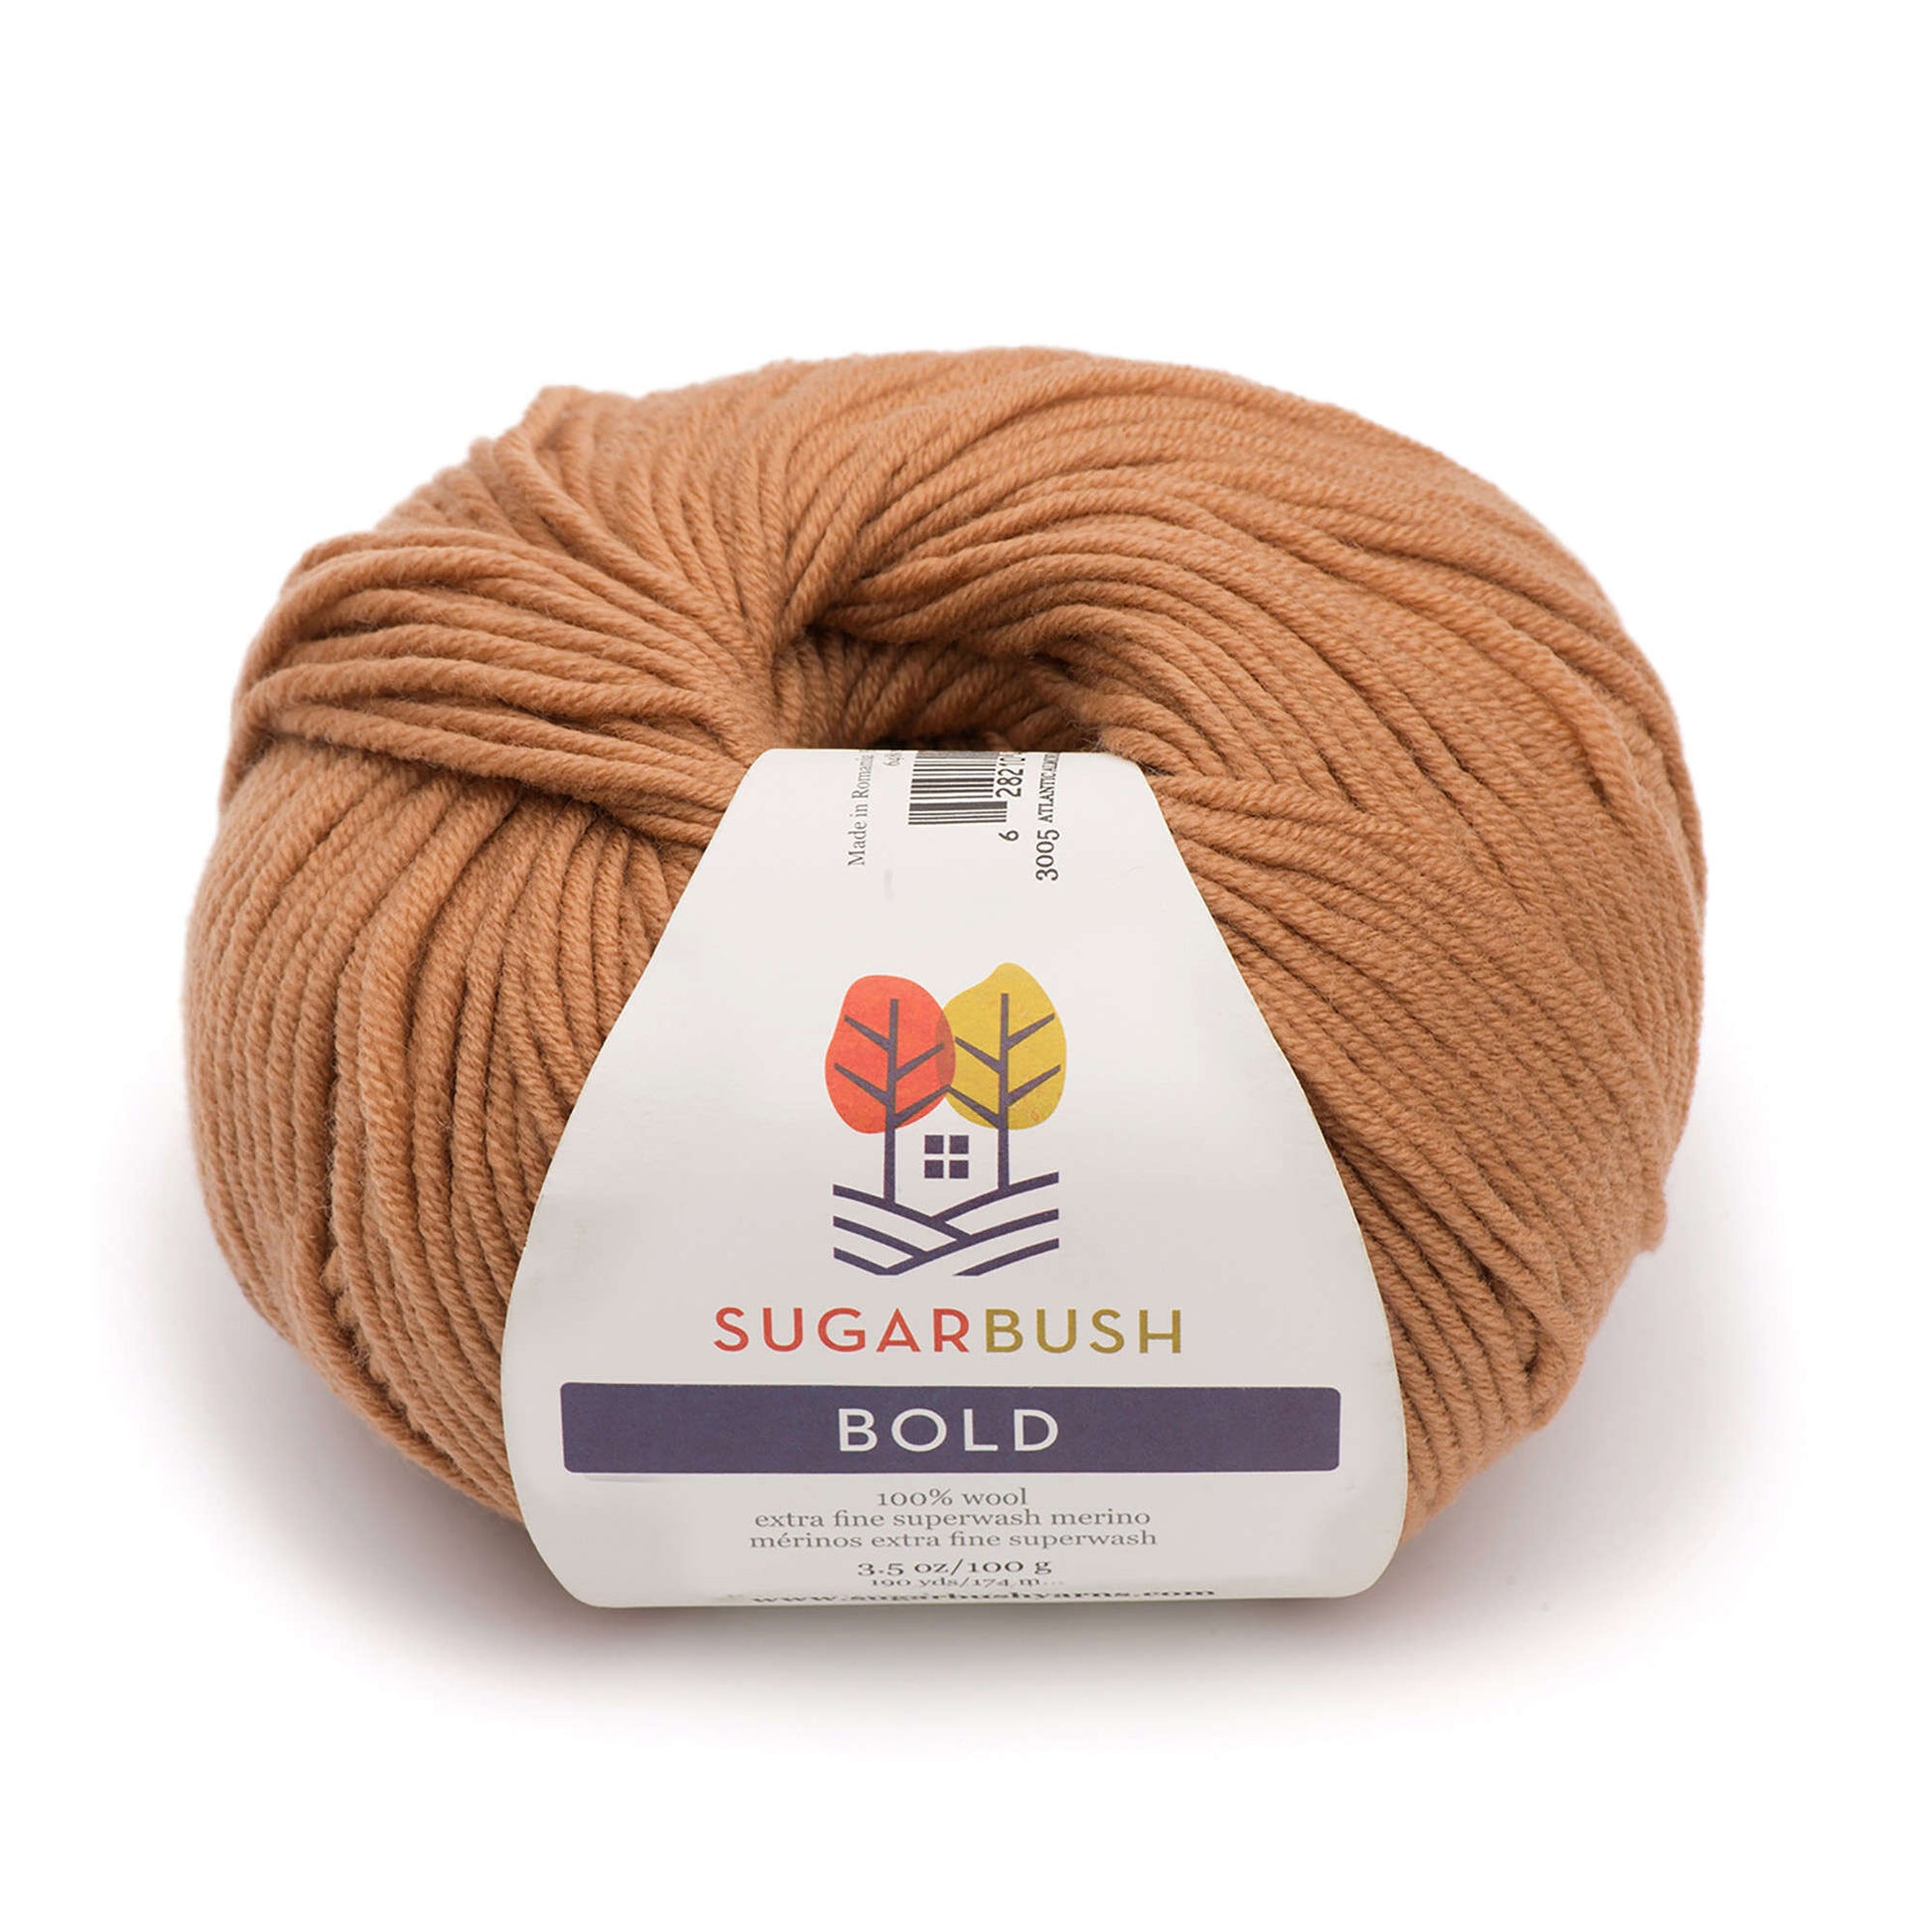 Sugar Bush Bold Yarn - Discontinued